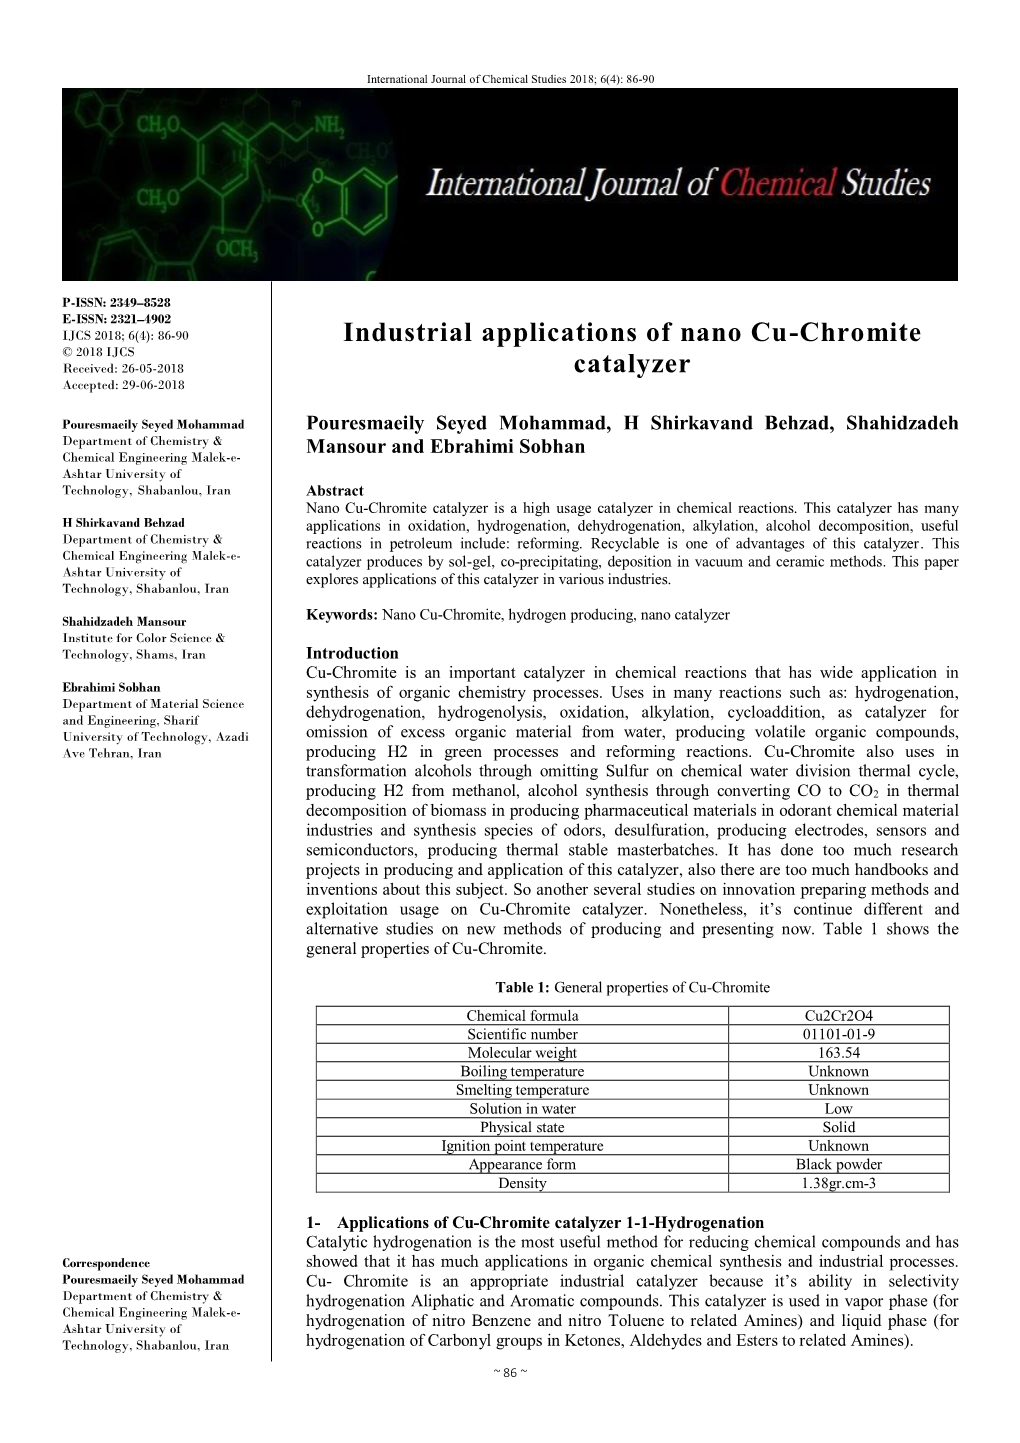 Industrial Applications of Nano Cu-Chromite Catalyzer